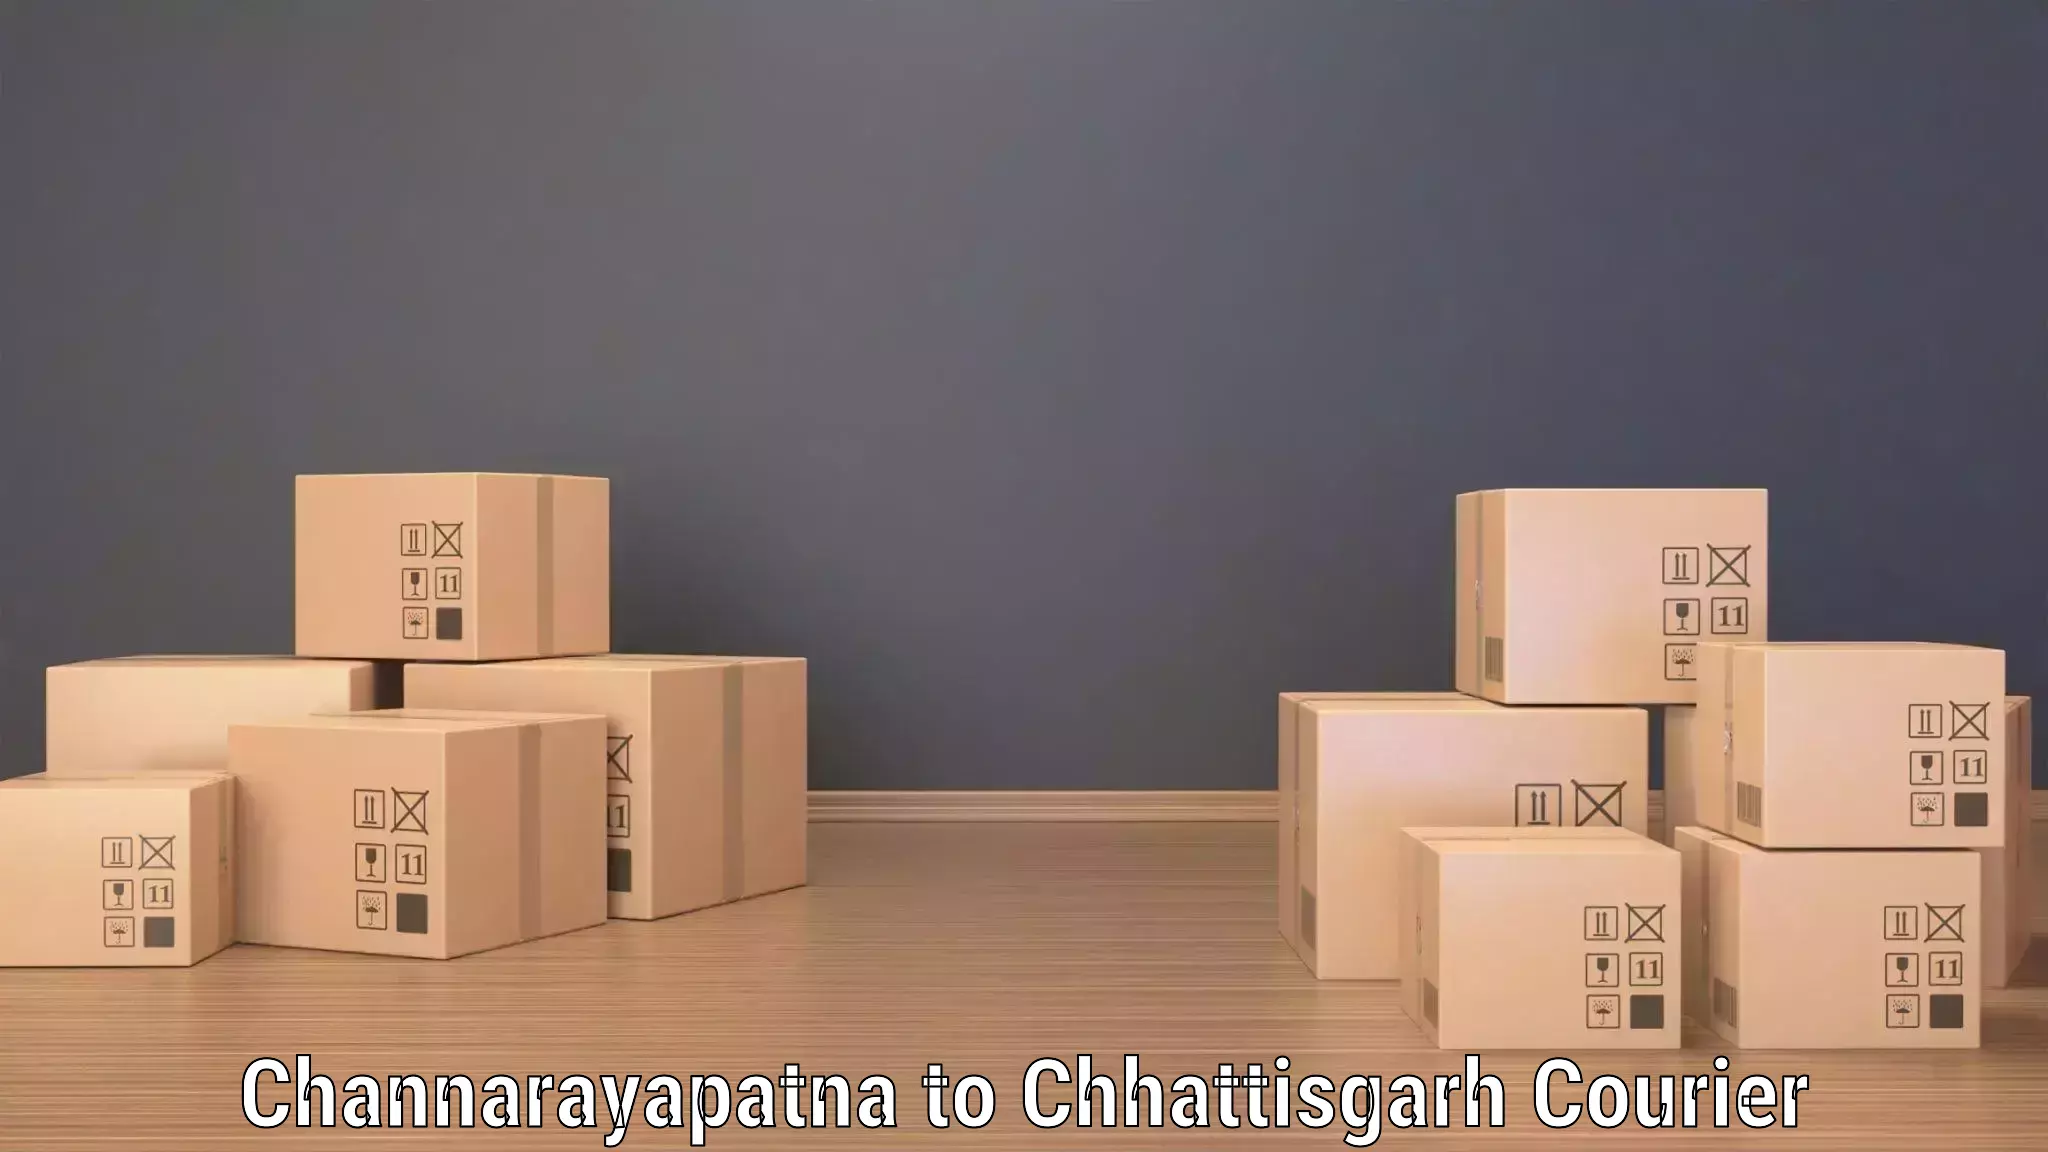 Courier service comparison Channarayapatna to Korba